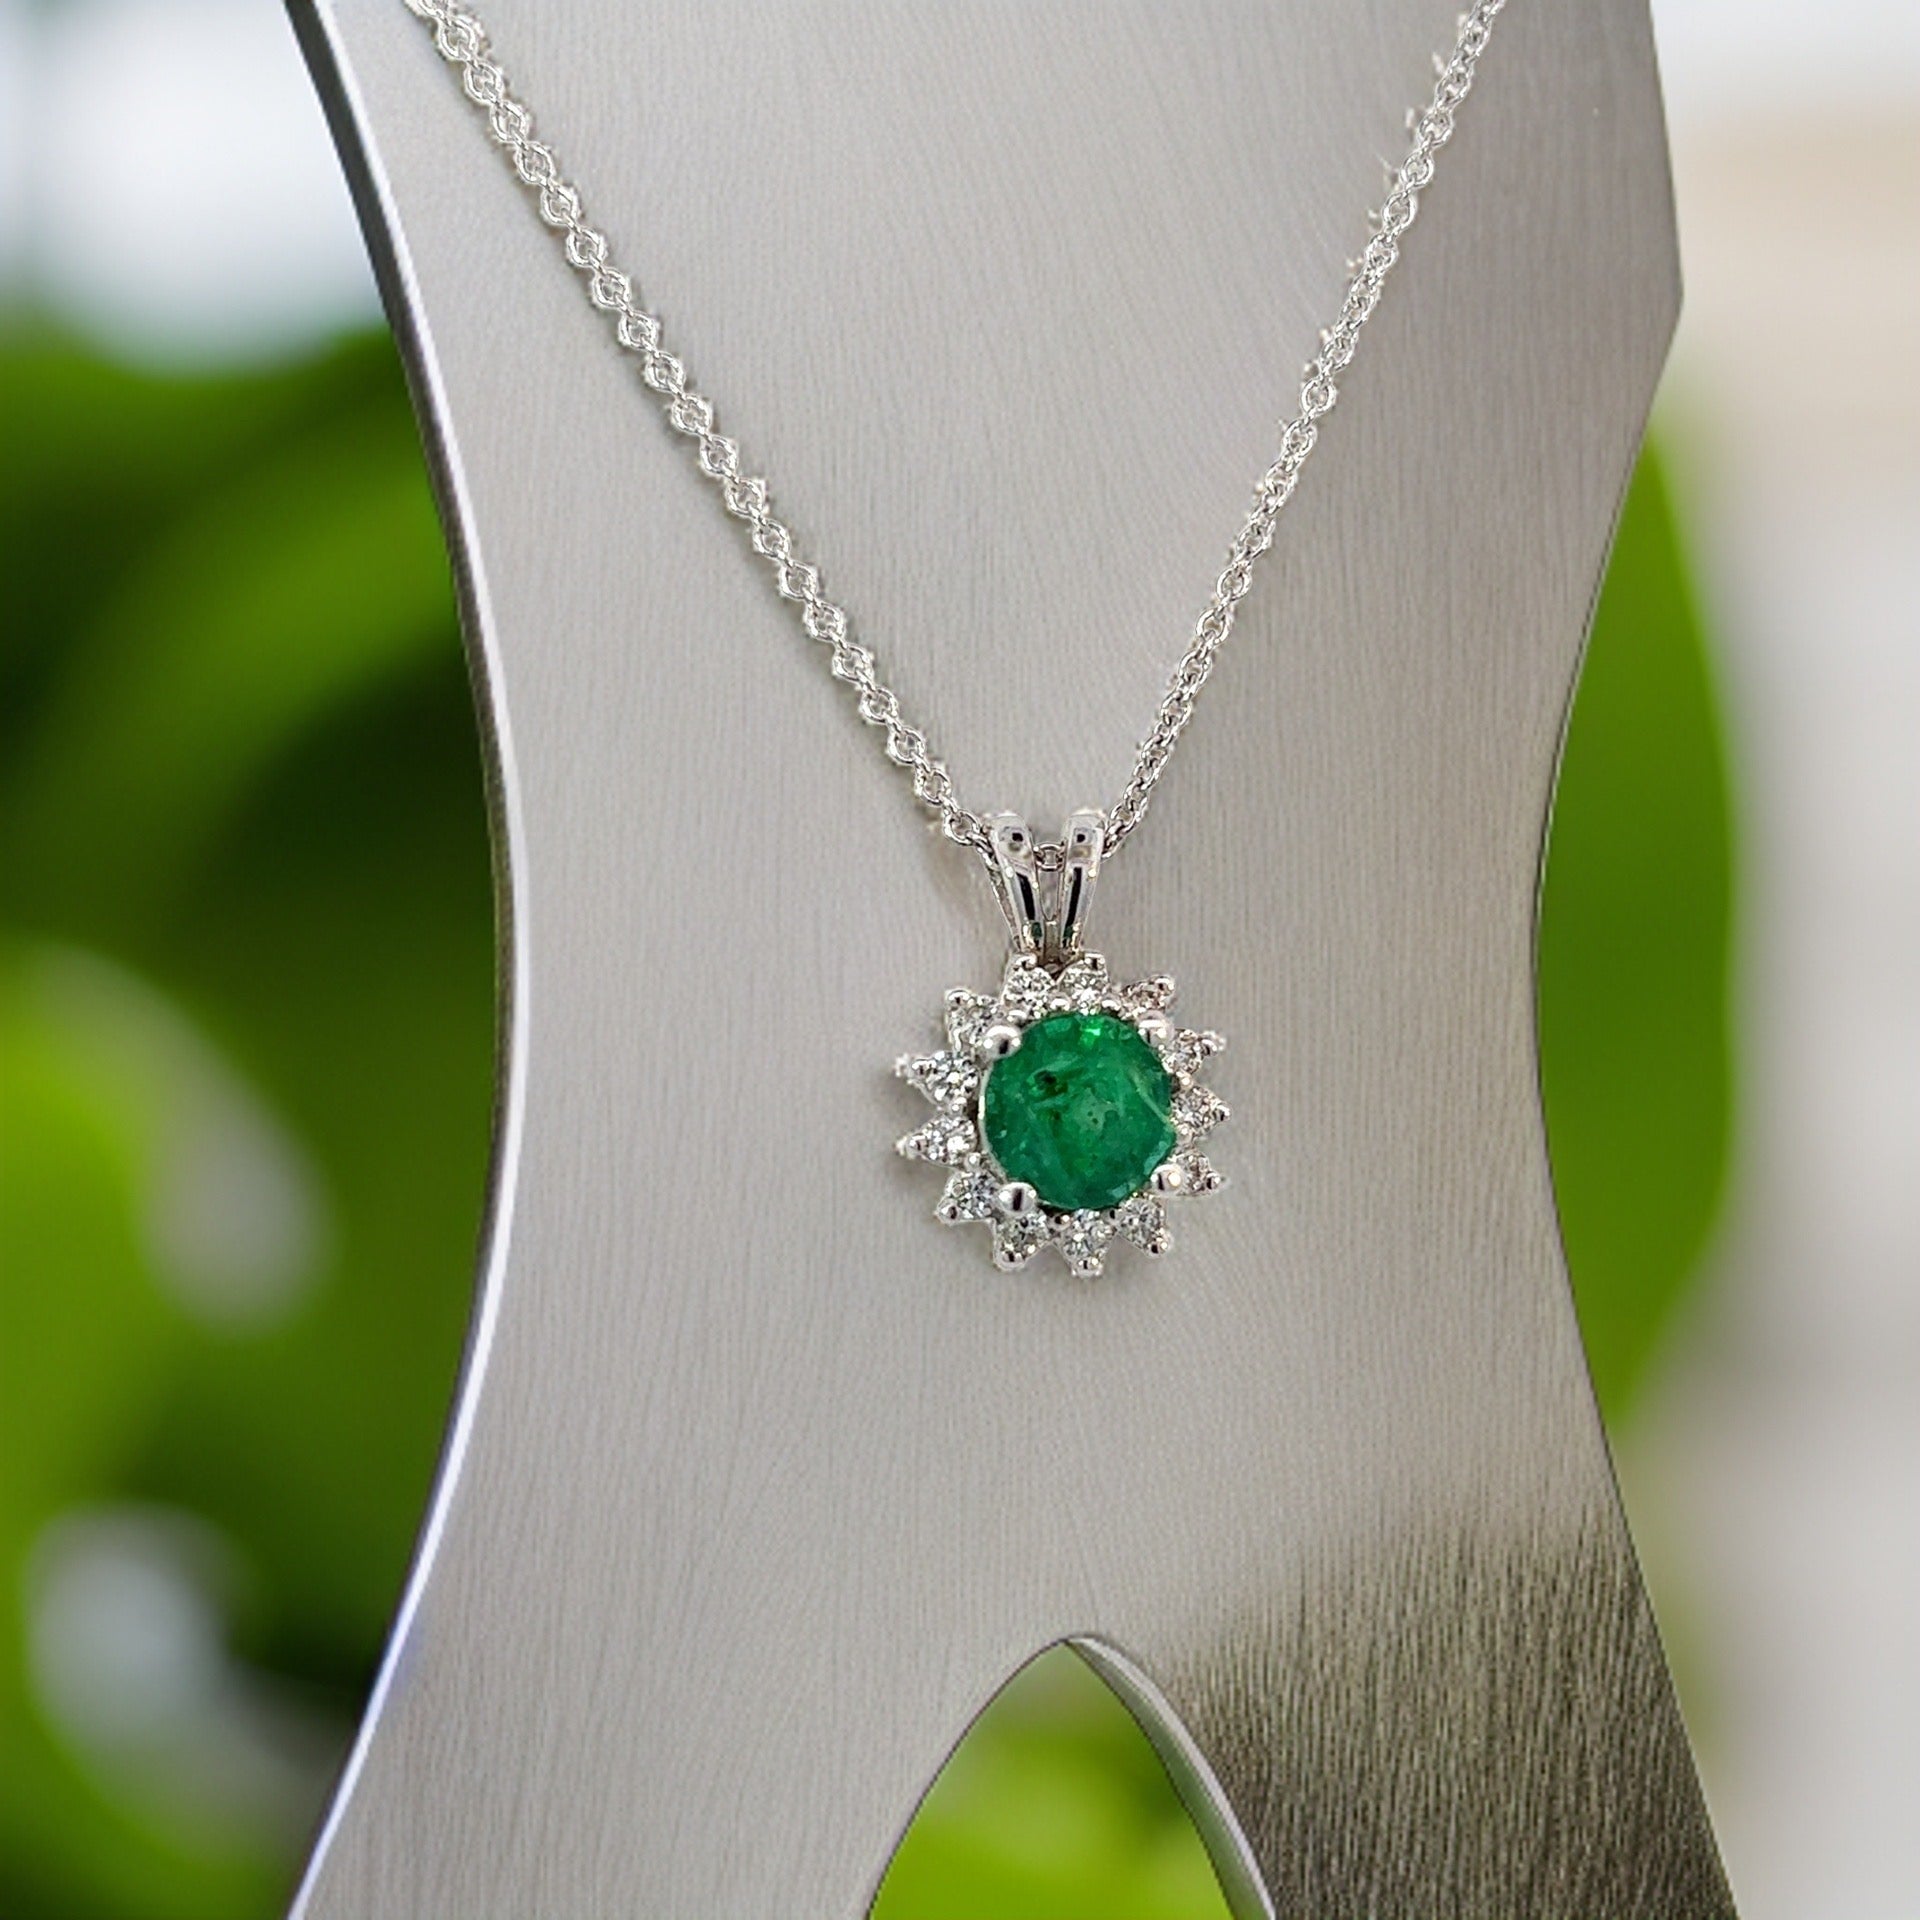 Natural Emerald Diamond Pendant With Chain 17.5" 14k WG 1.35 TCW Certified $4,975 216665 - Certified Fine Jewelry